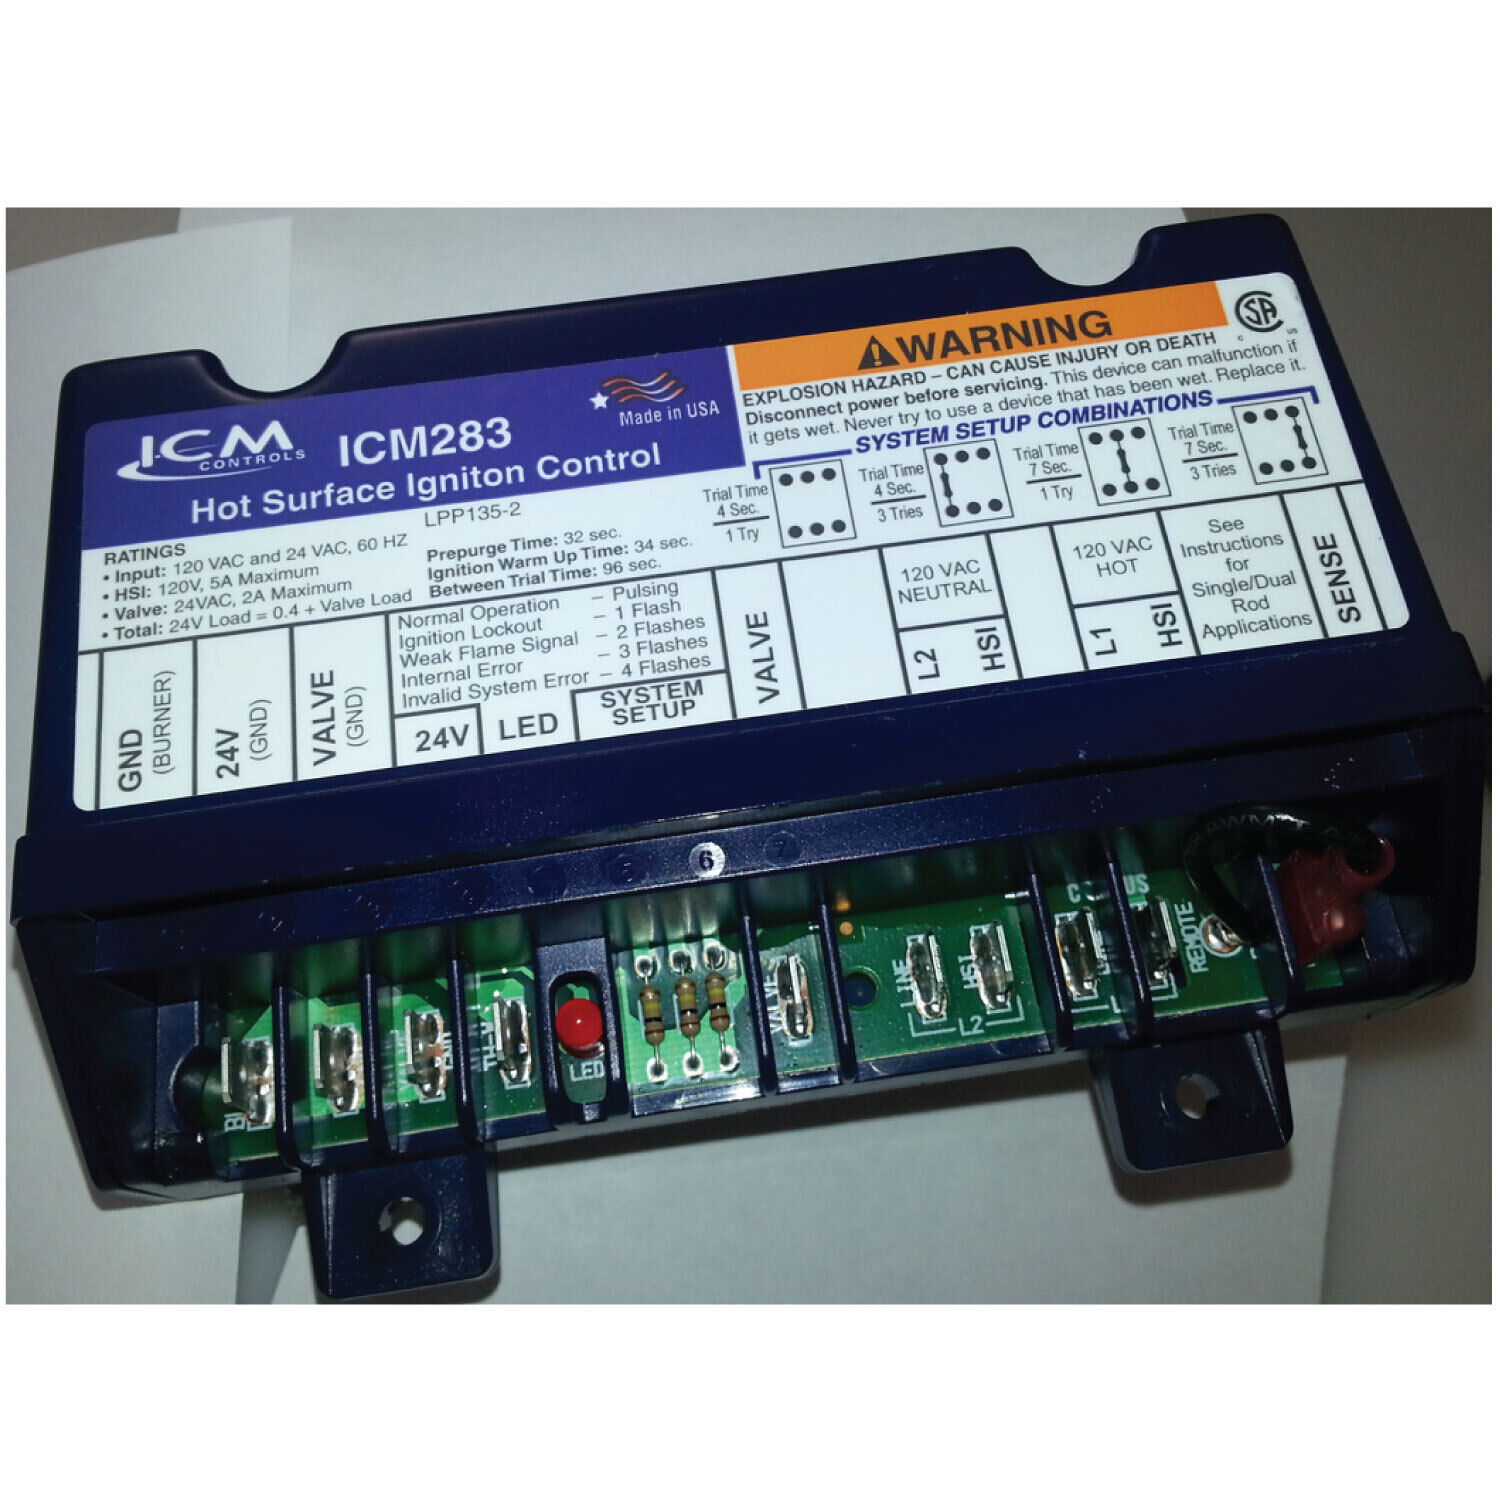 ICM ICM2901 Gas Ignition Control